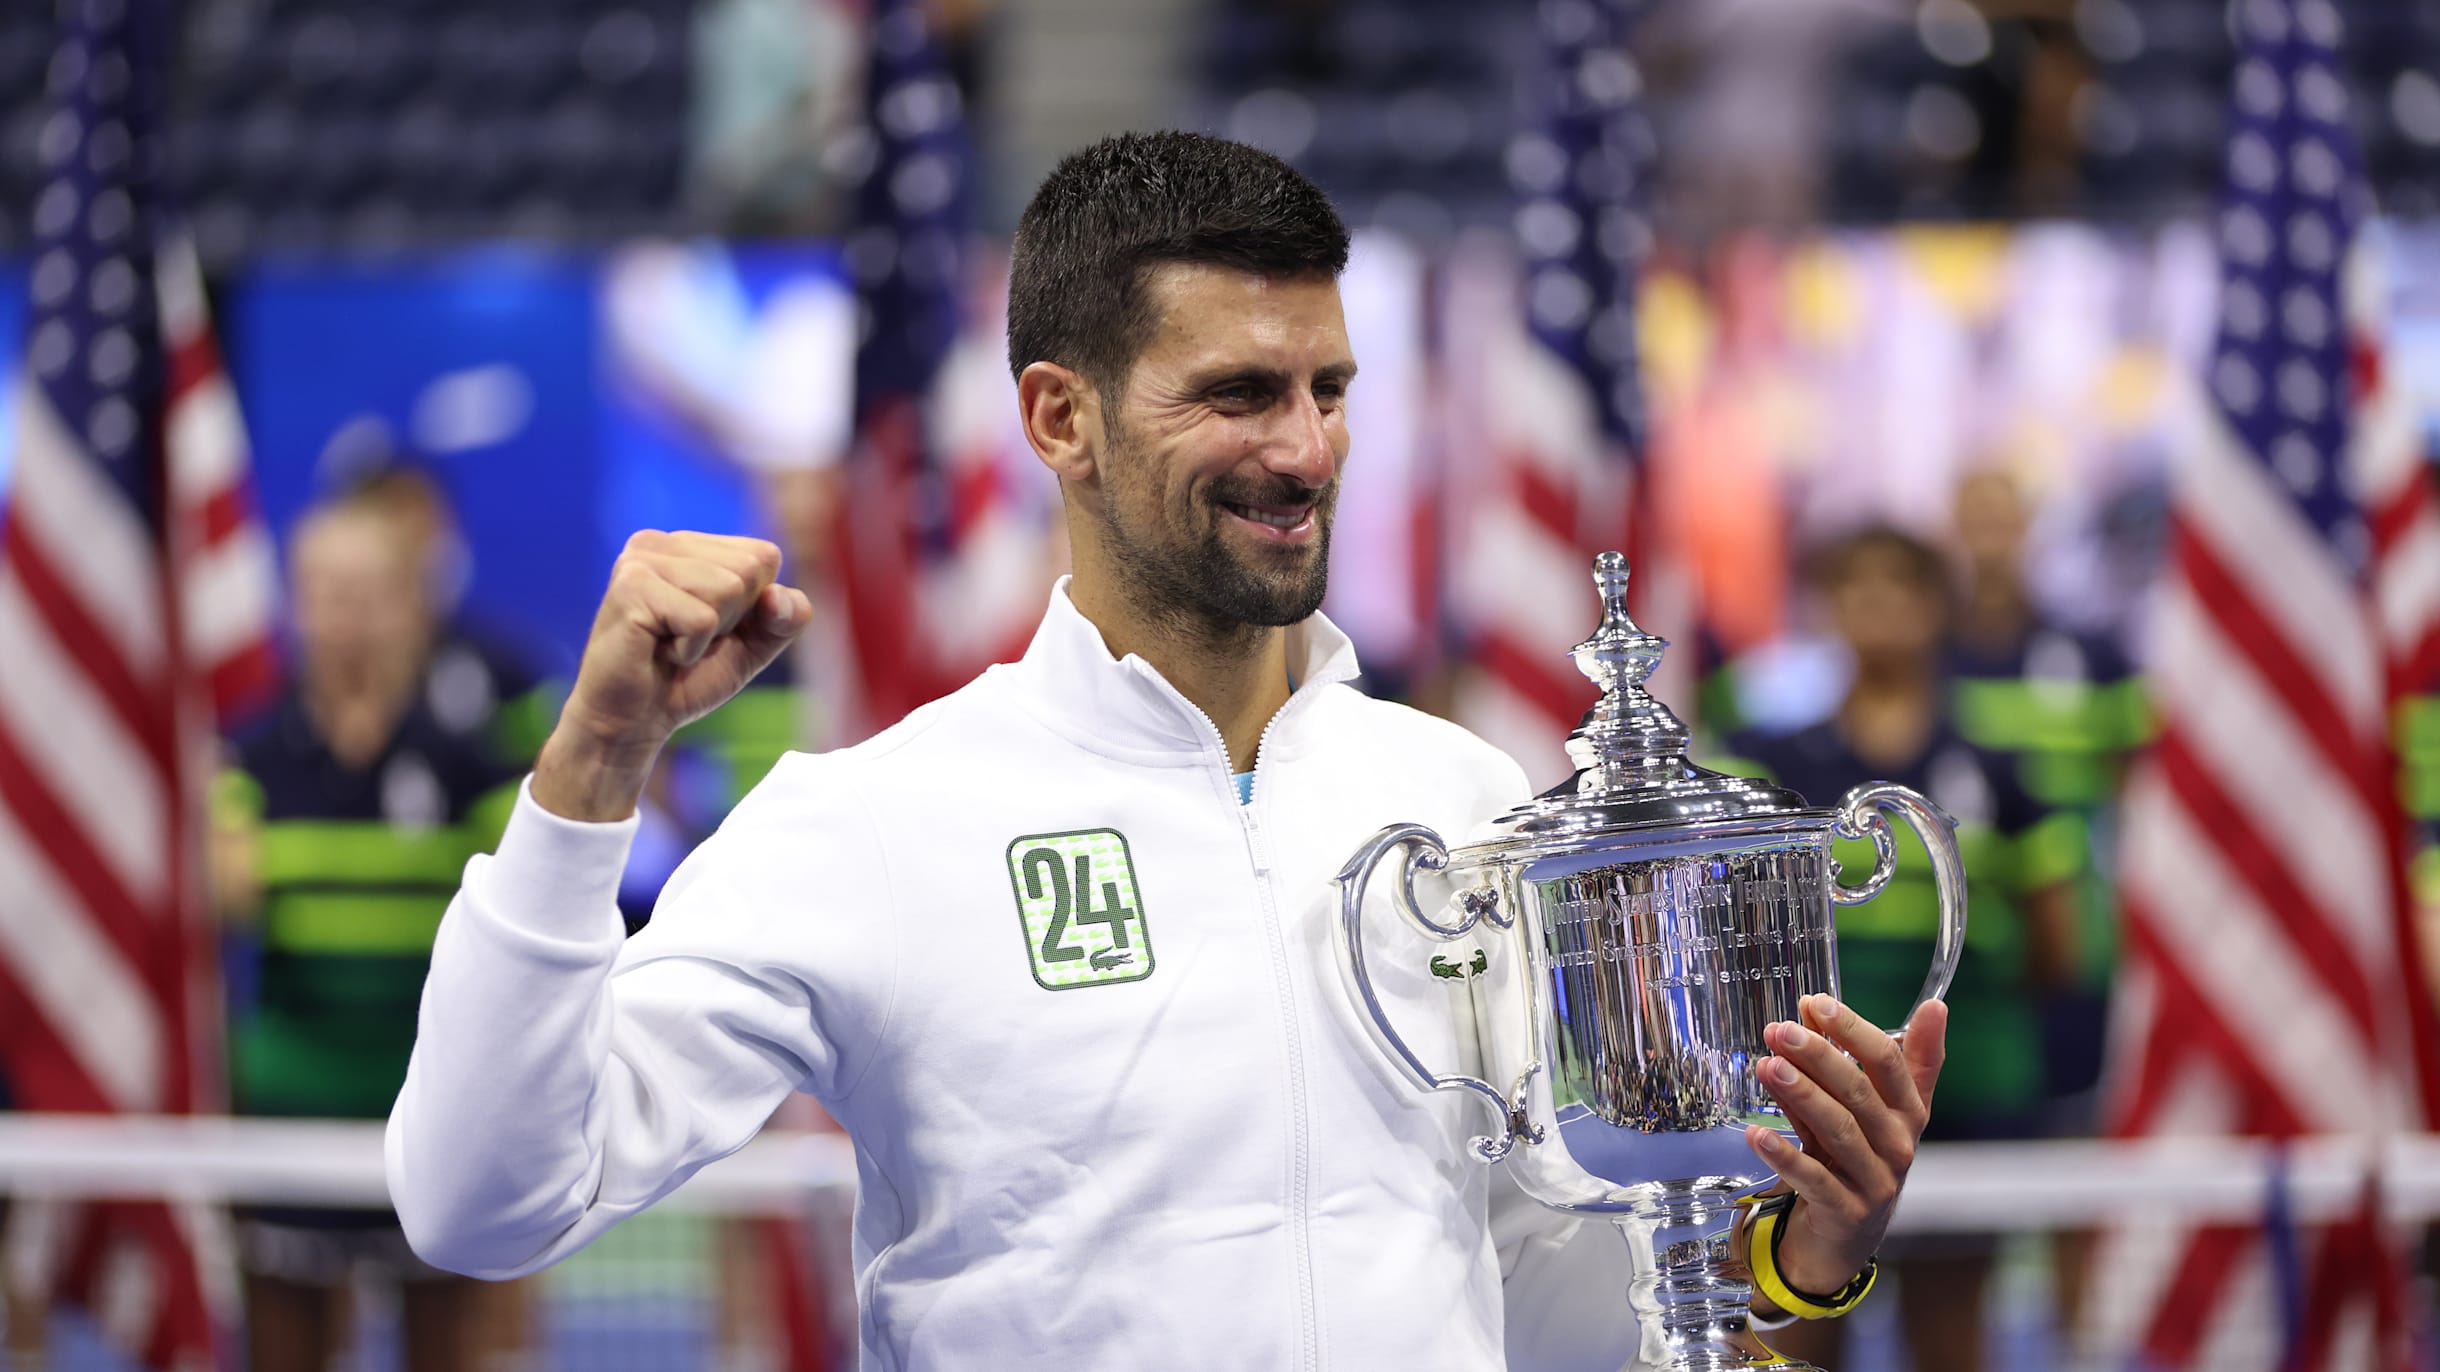 Novak Djokovics Grand Slam titles, tennis records and stats